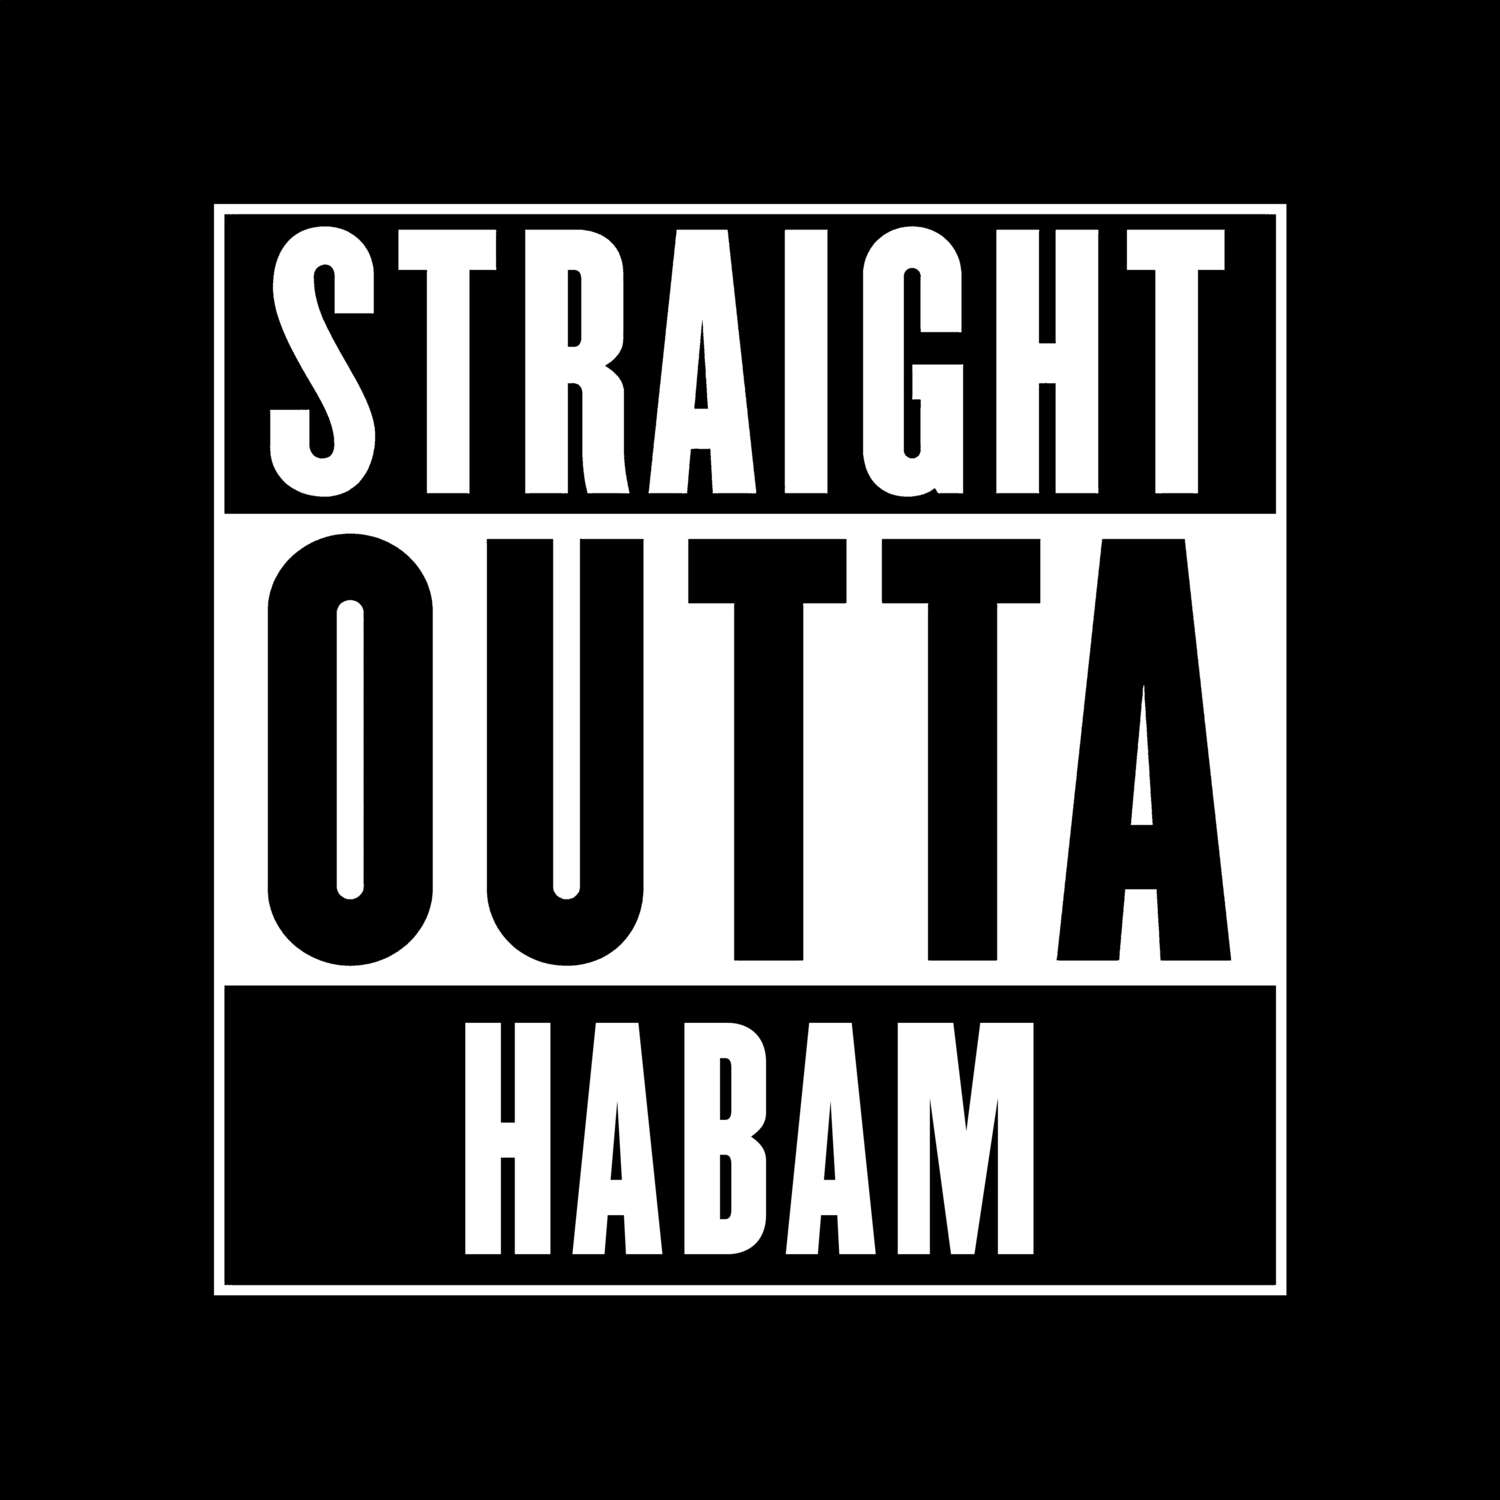 Habam T-Shirt »Straight Outta«